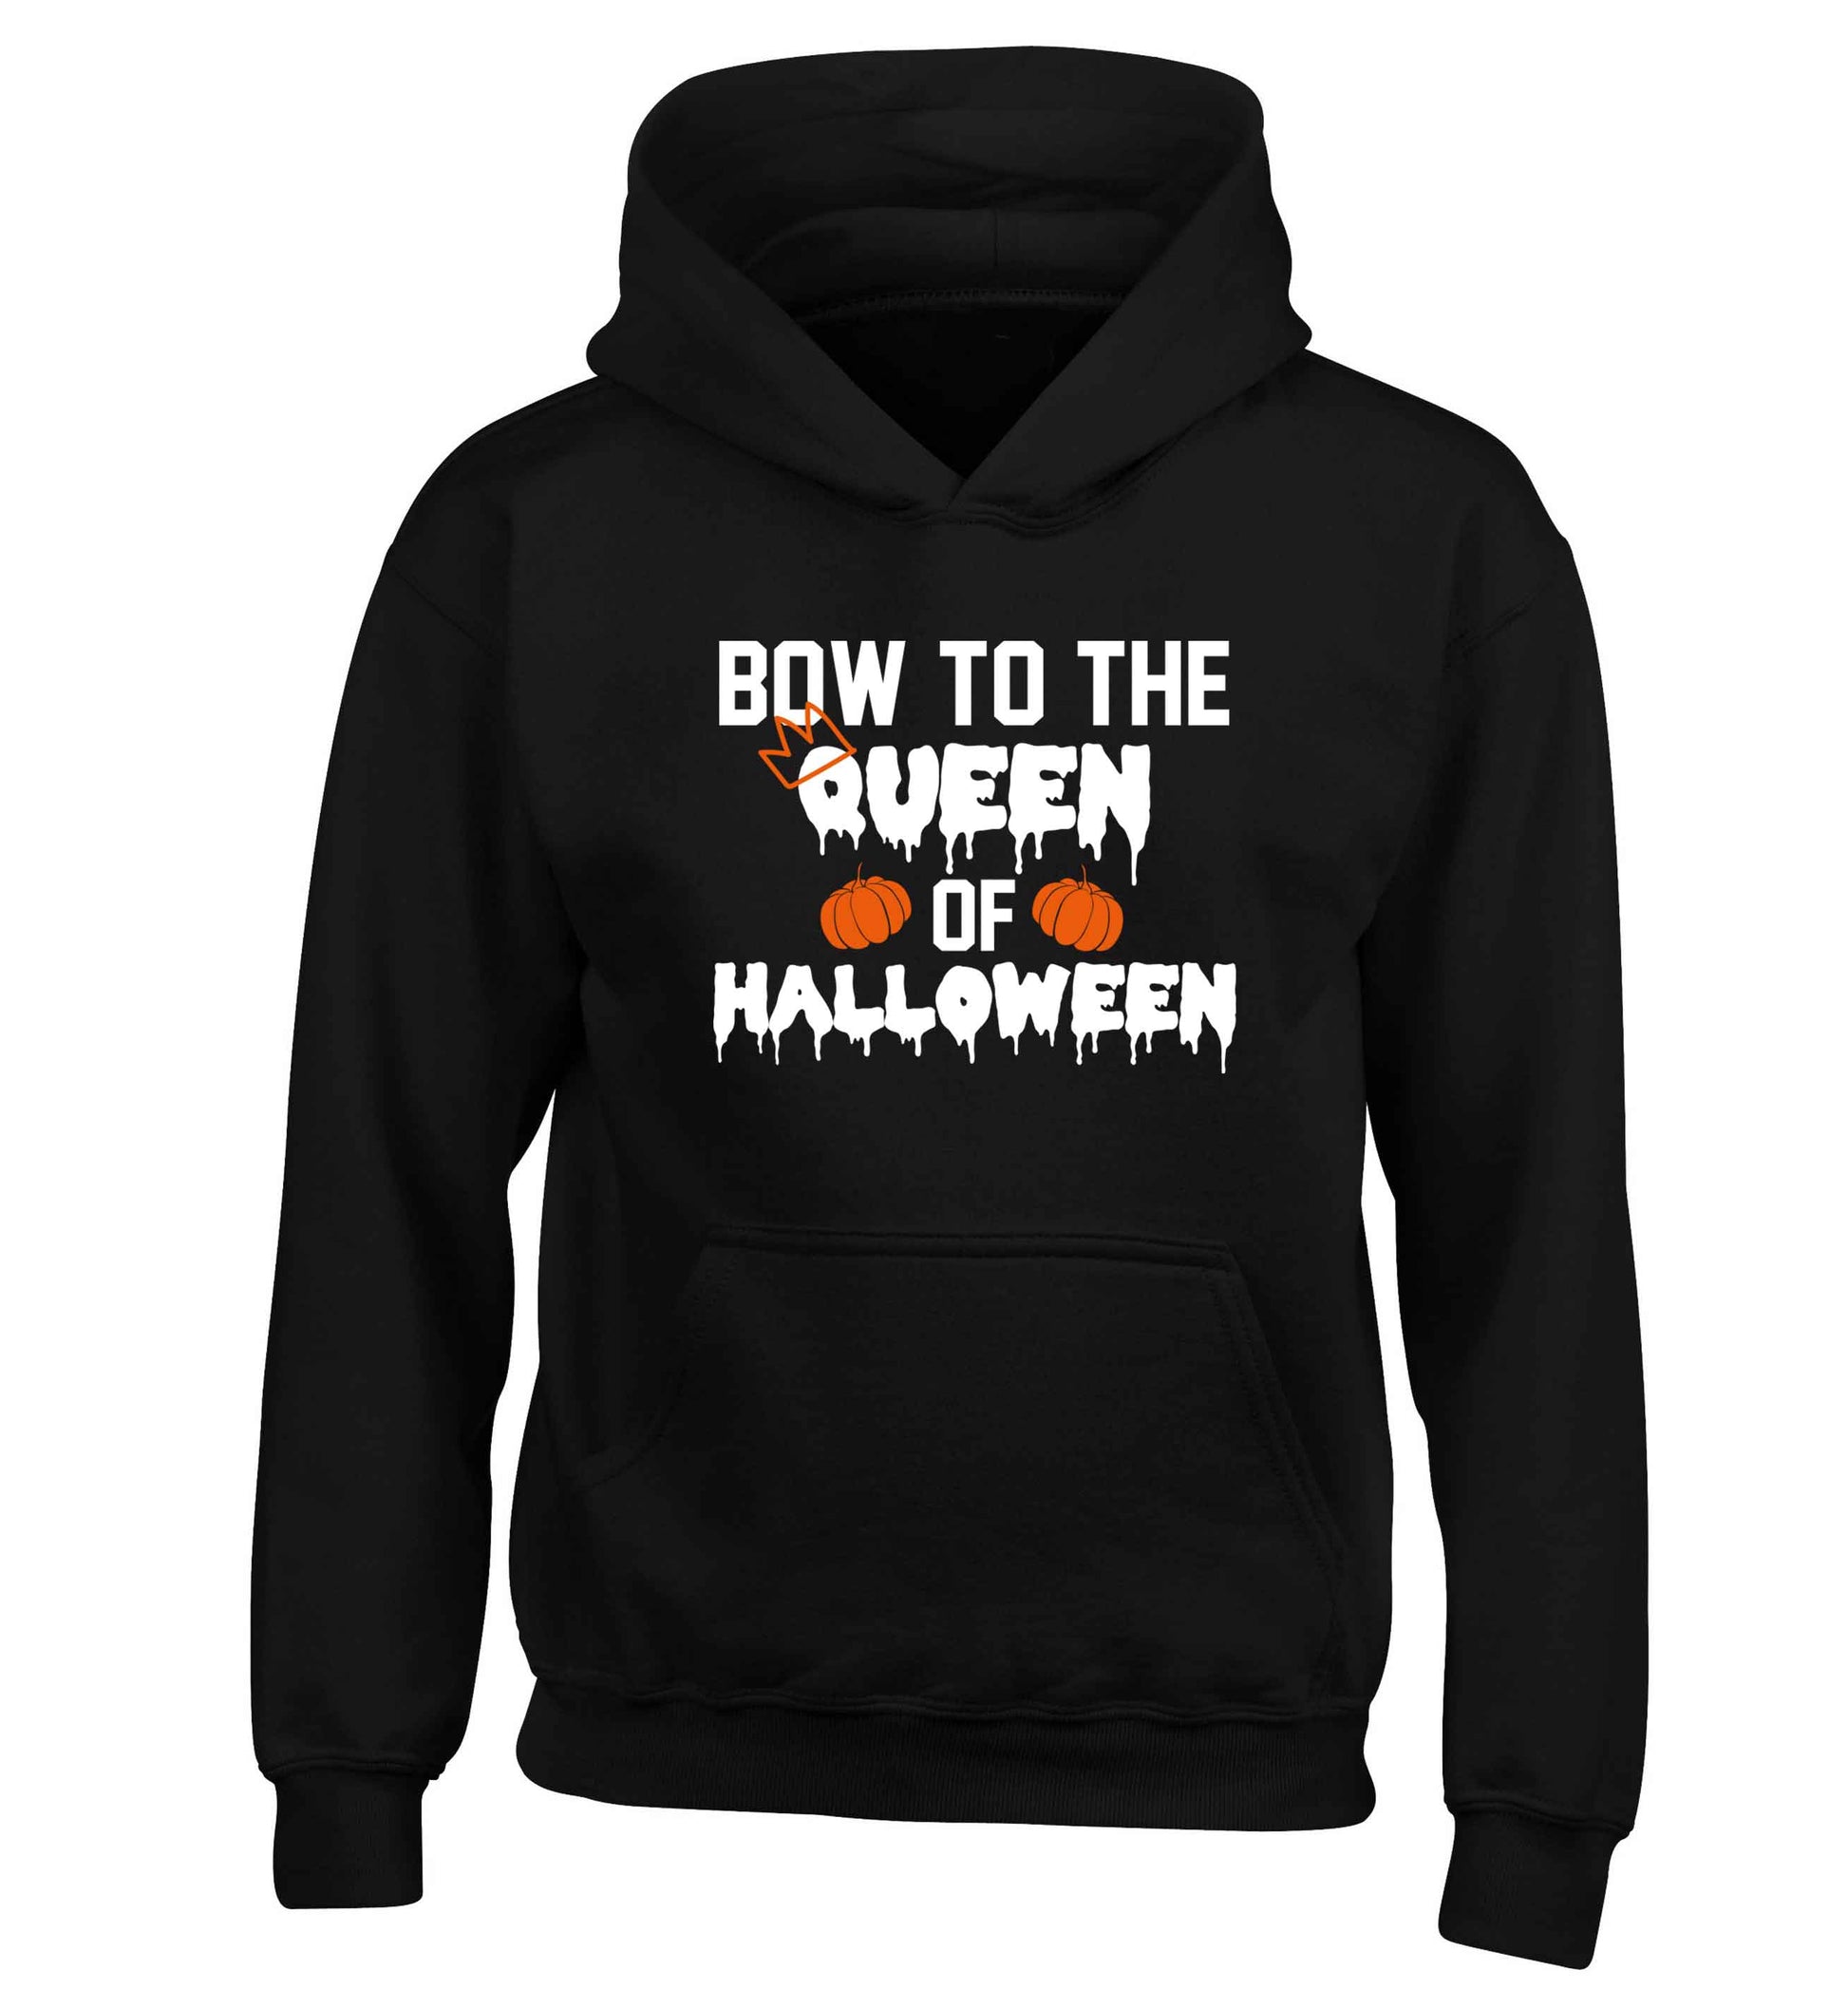 Bow to the Queen of halloween children's black hoodie 12-13 Years